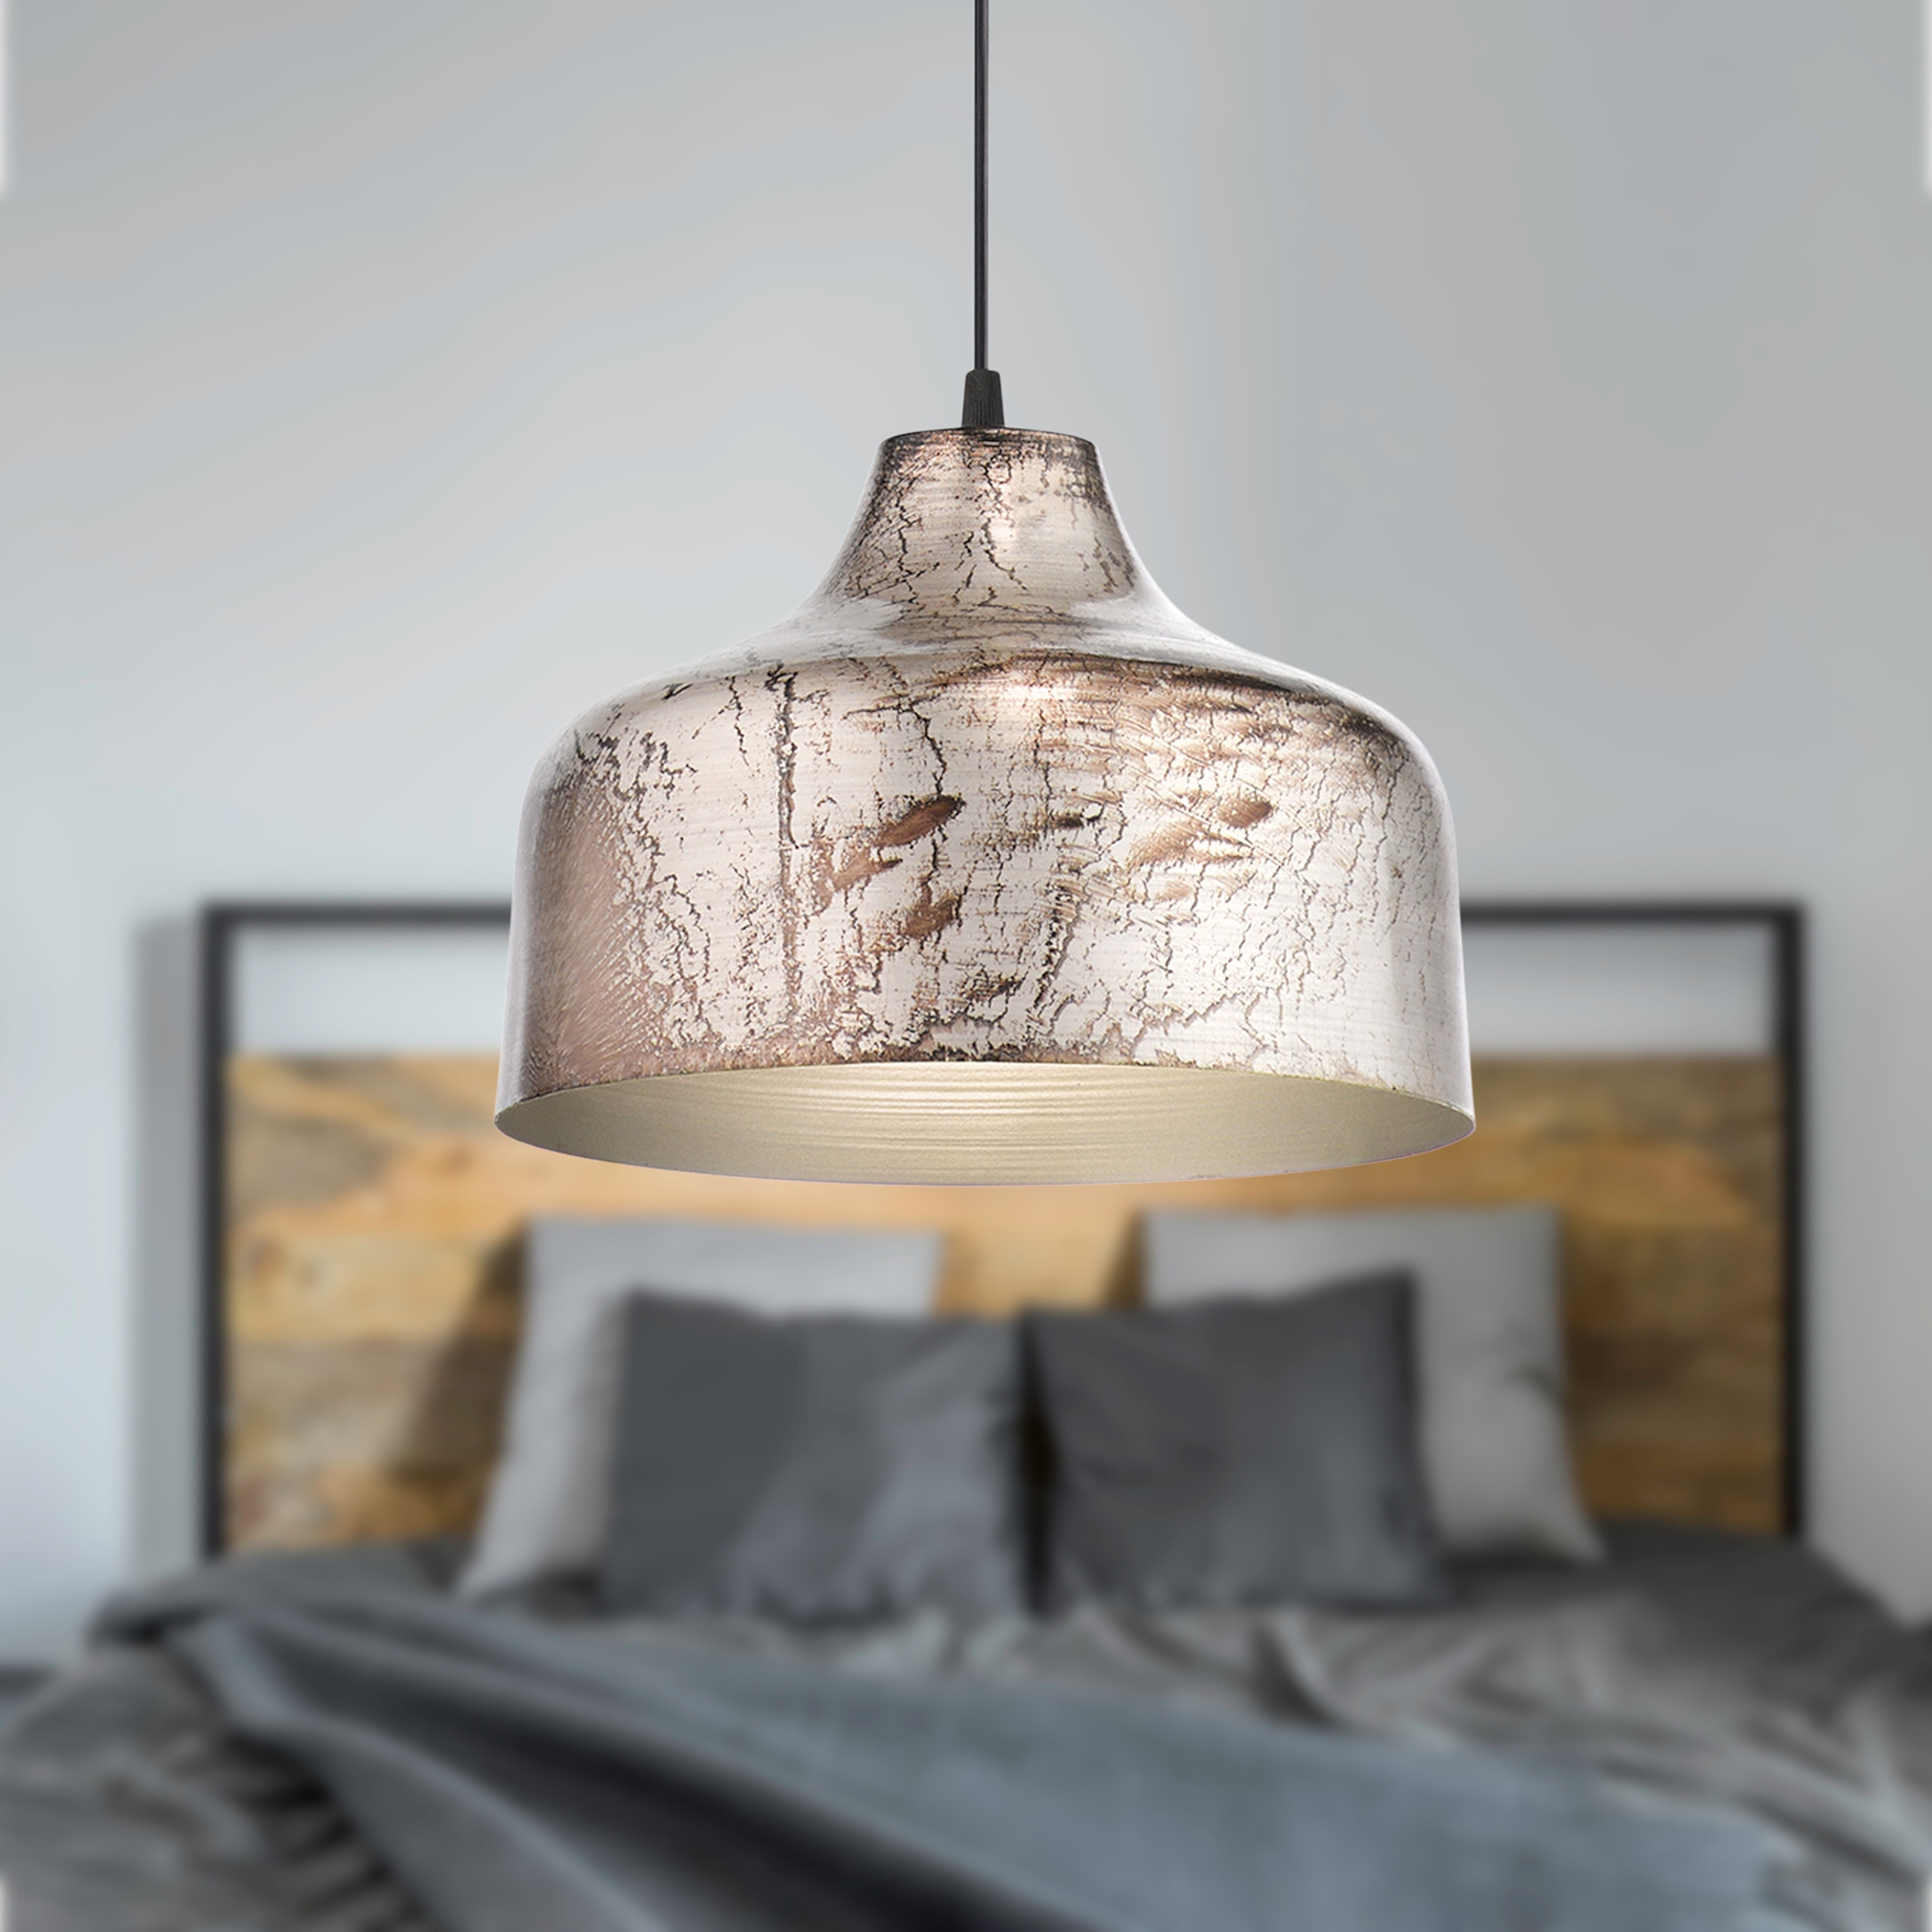 Design Classics Serra Satin Brass Pendant Light with Bowl/Dome Shade